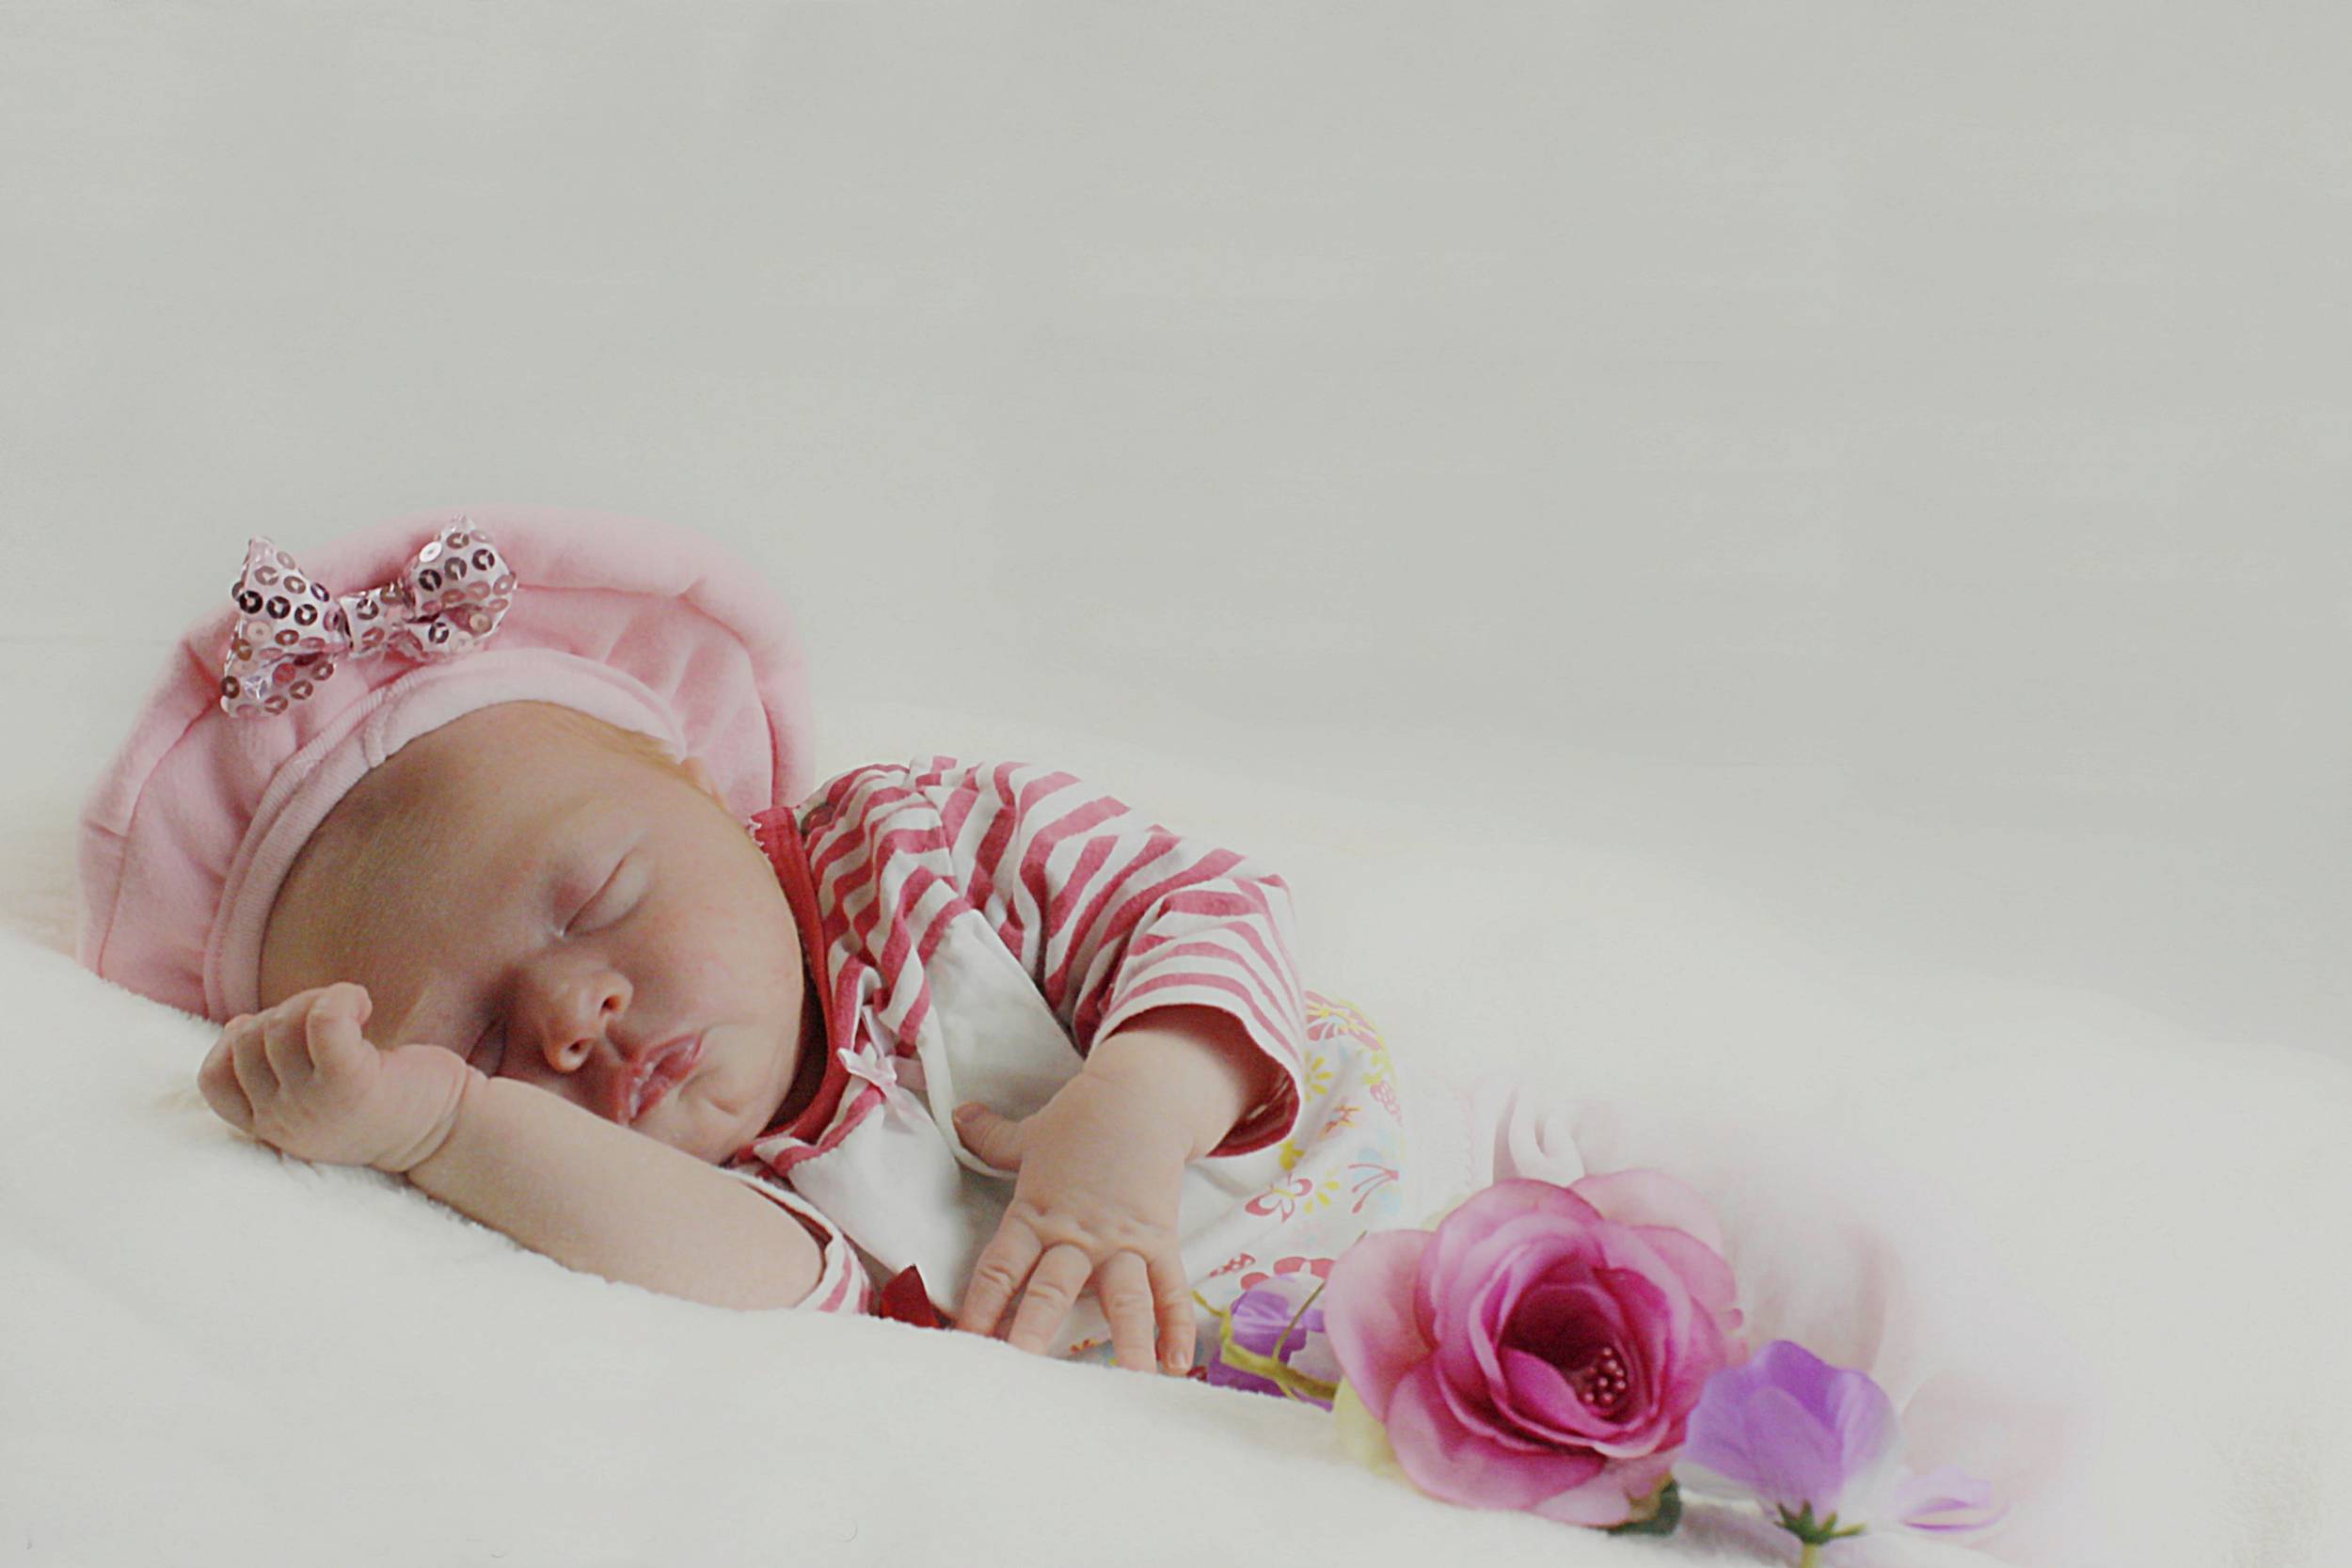 Happix-fotograaf-Nathalie-Joan-Veenendaal-Newborn-_-Baby-fotografie-074_ox2hWuN5c.jpg